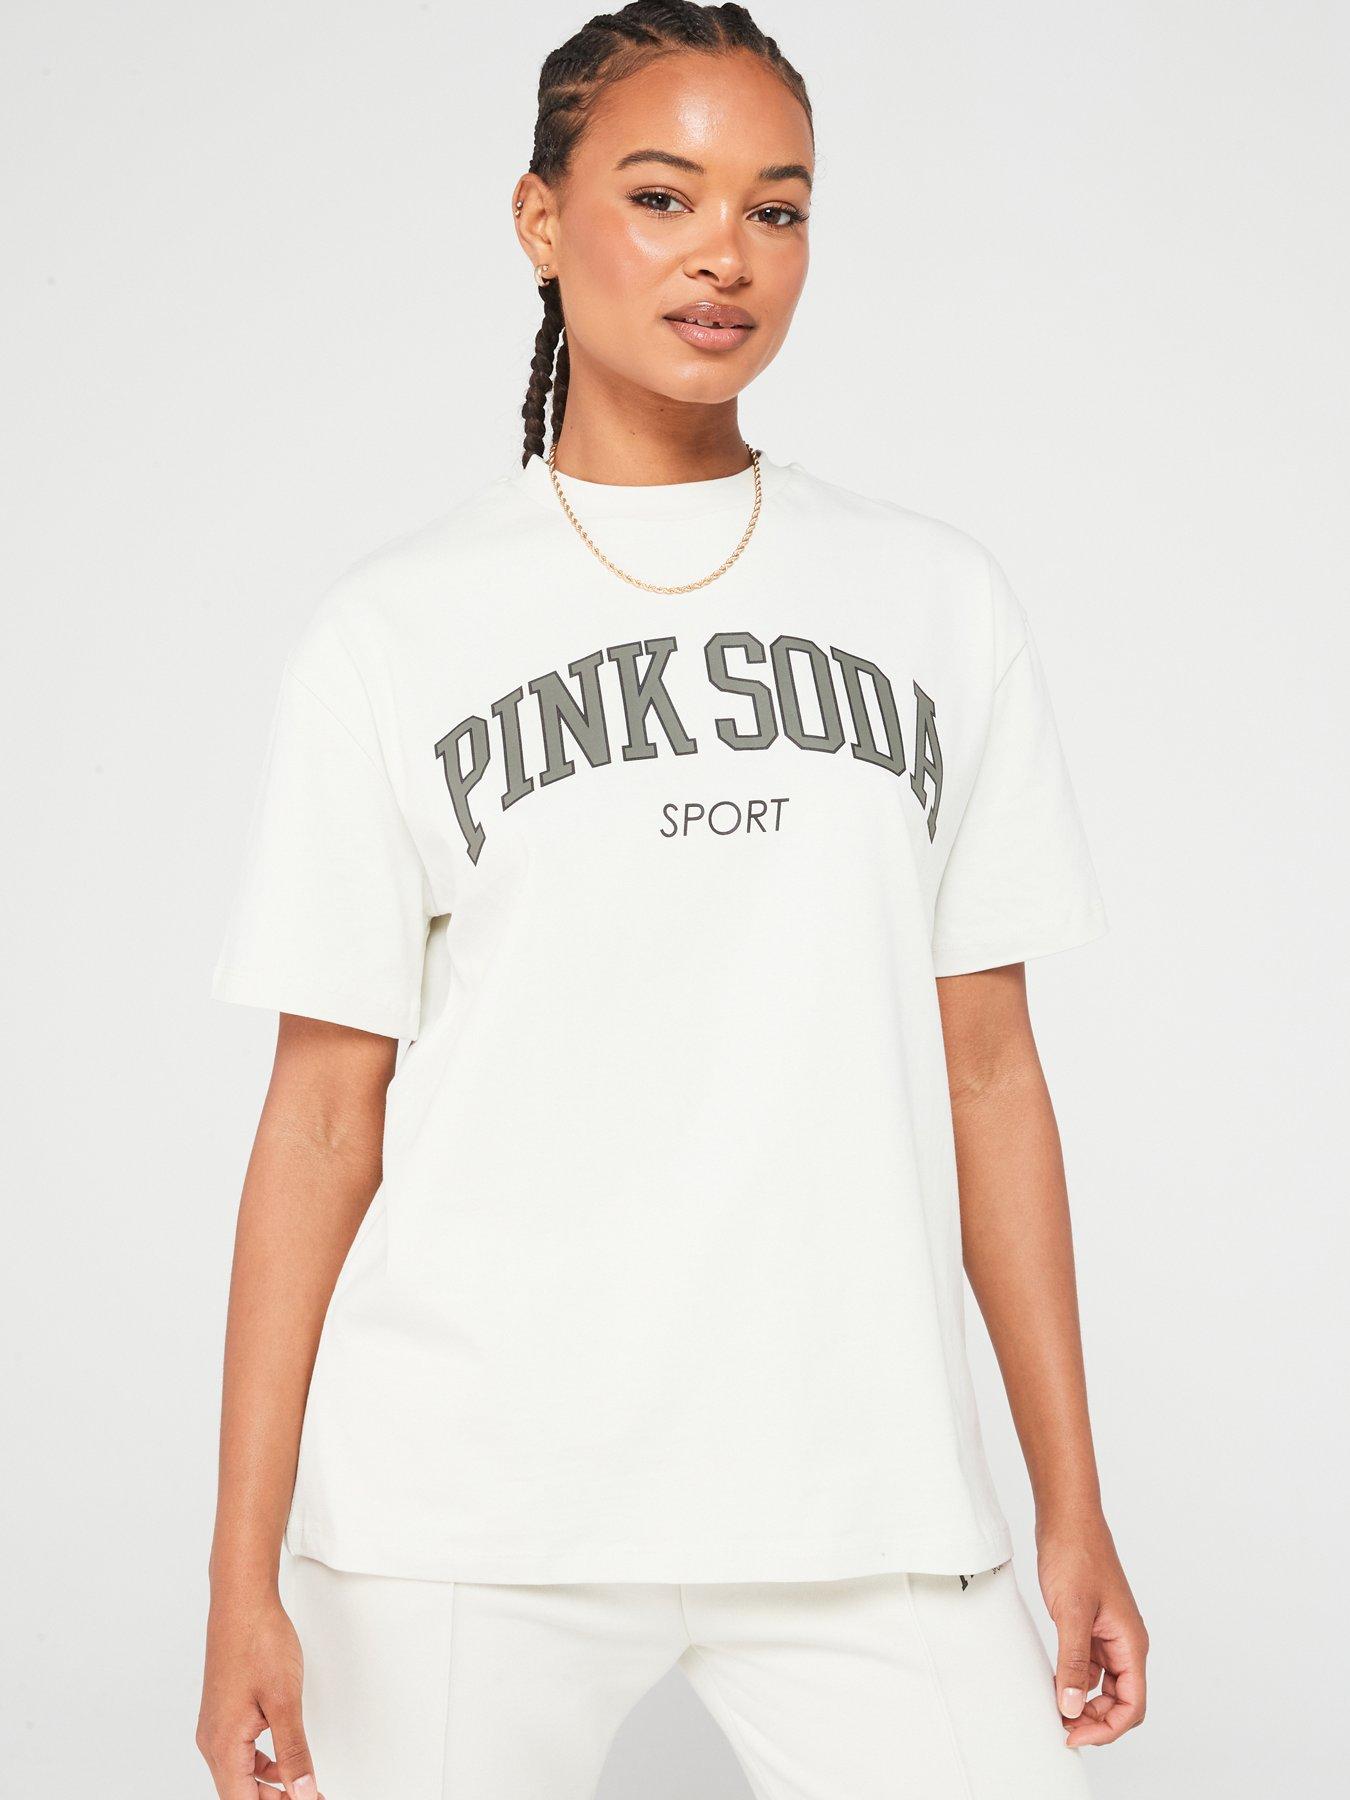 Pink Soda Sport Topanga polyester blend leggings in black